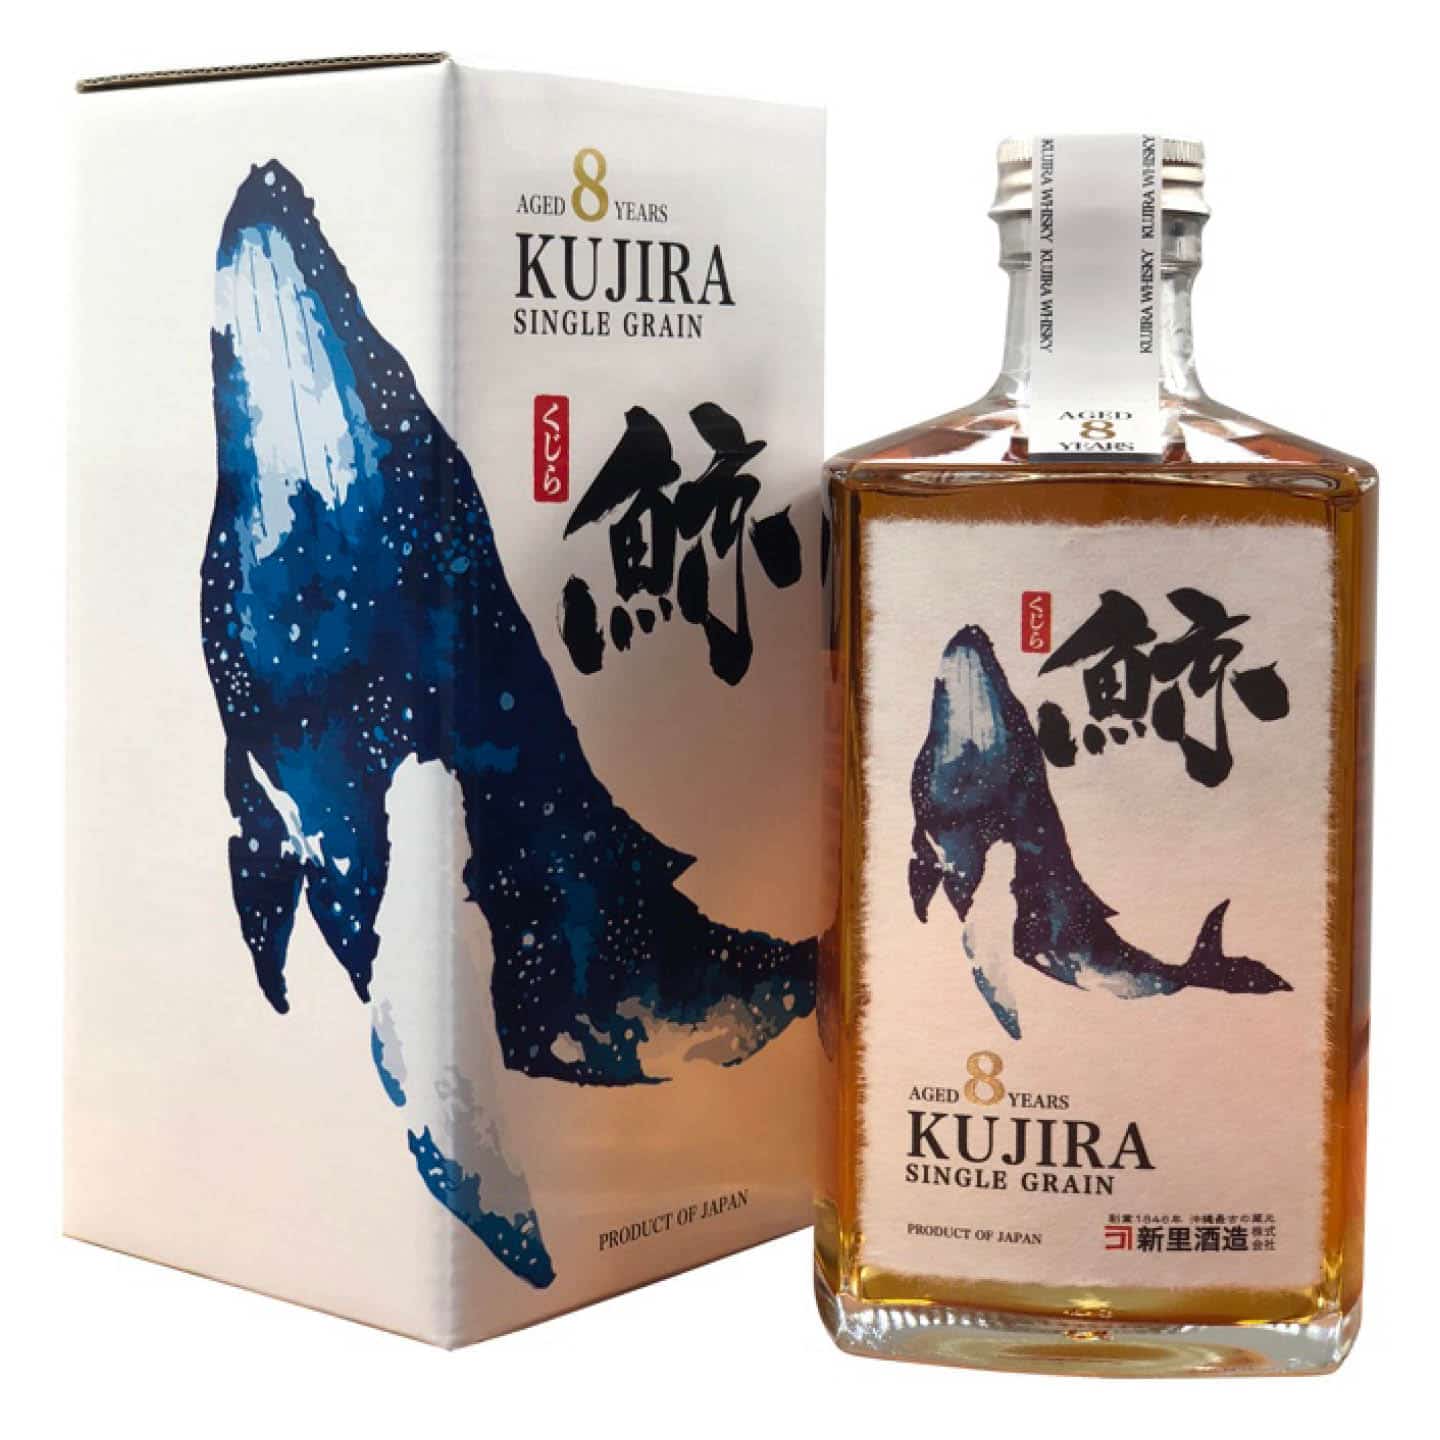 kujira whisky single grain japonais vieilli 8 ans